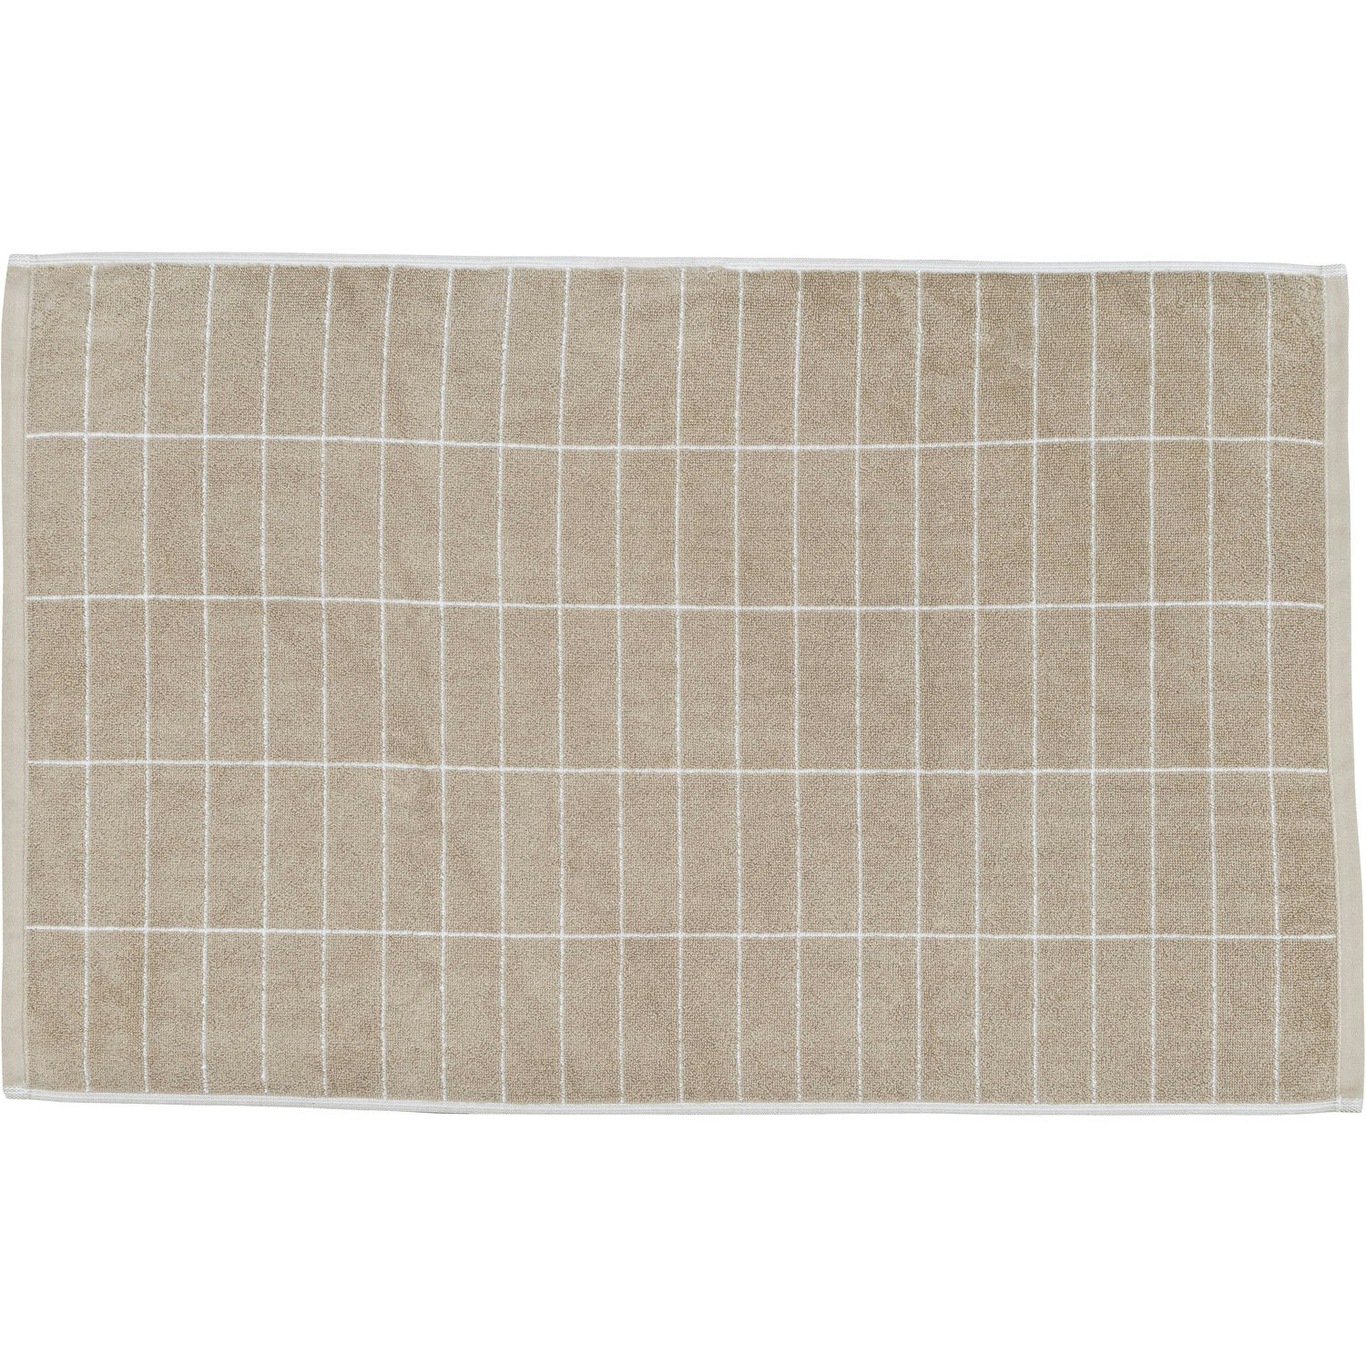 TILE STONE Badematte 50x80 cm, Off-white/Sand